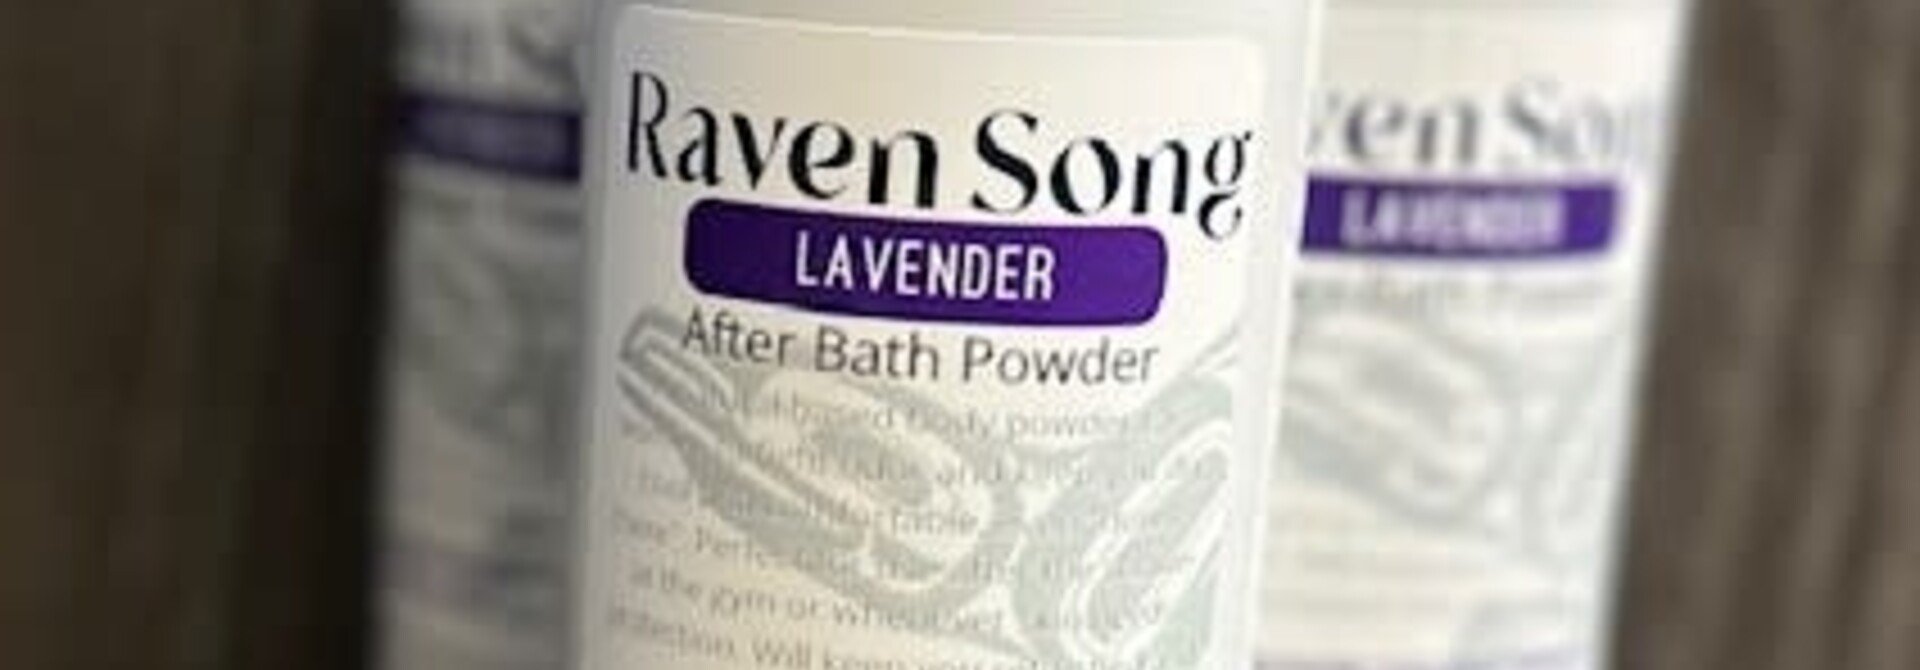 Lavender Body Powder by Raven Song